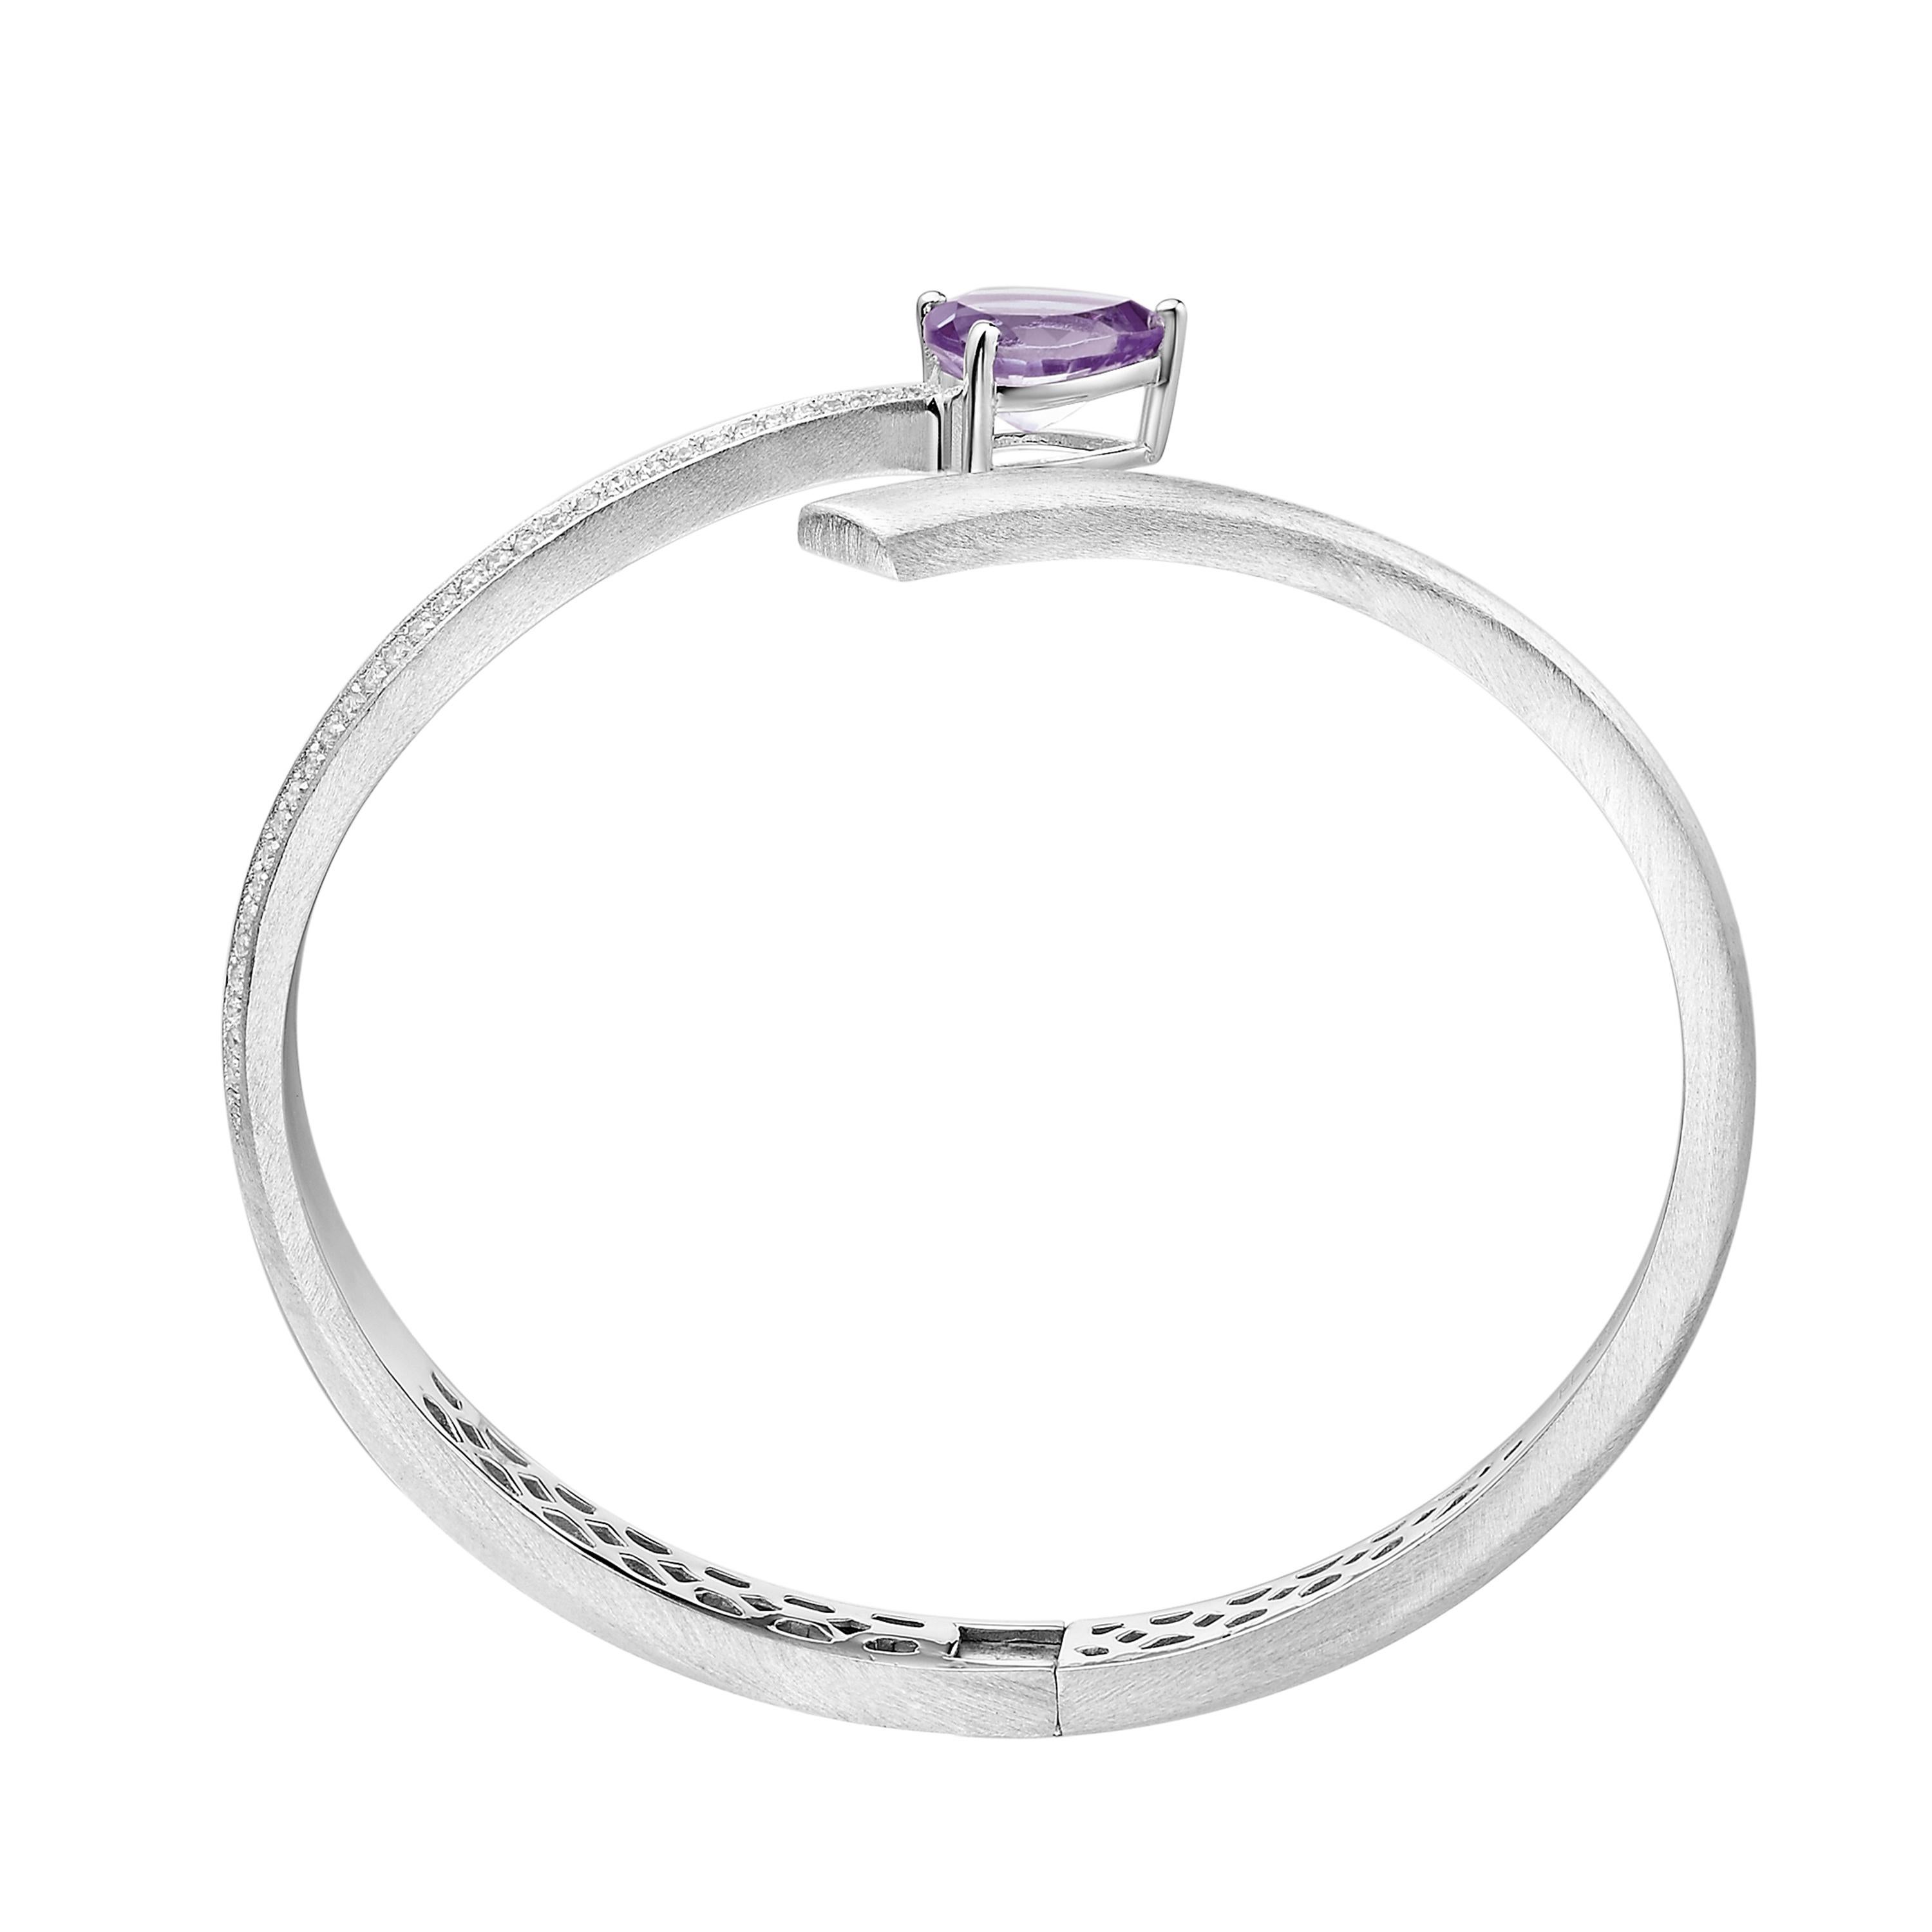 Contemporary Fei Liu Pear Cut Purple Amethyst Cubic Zirconia Sterling Silver Bangle Bracelet